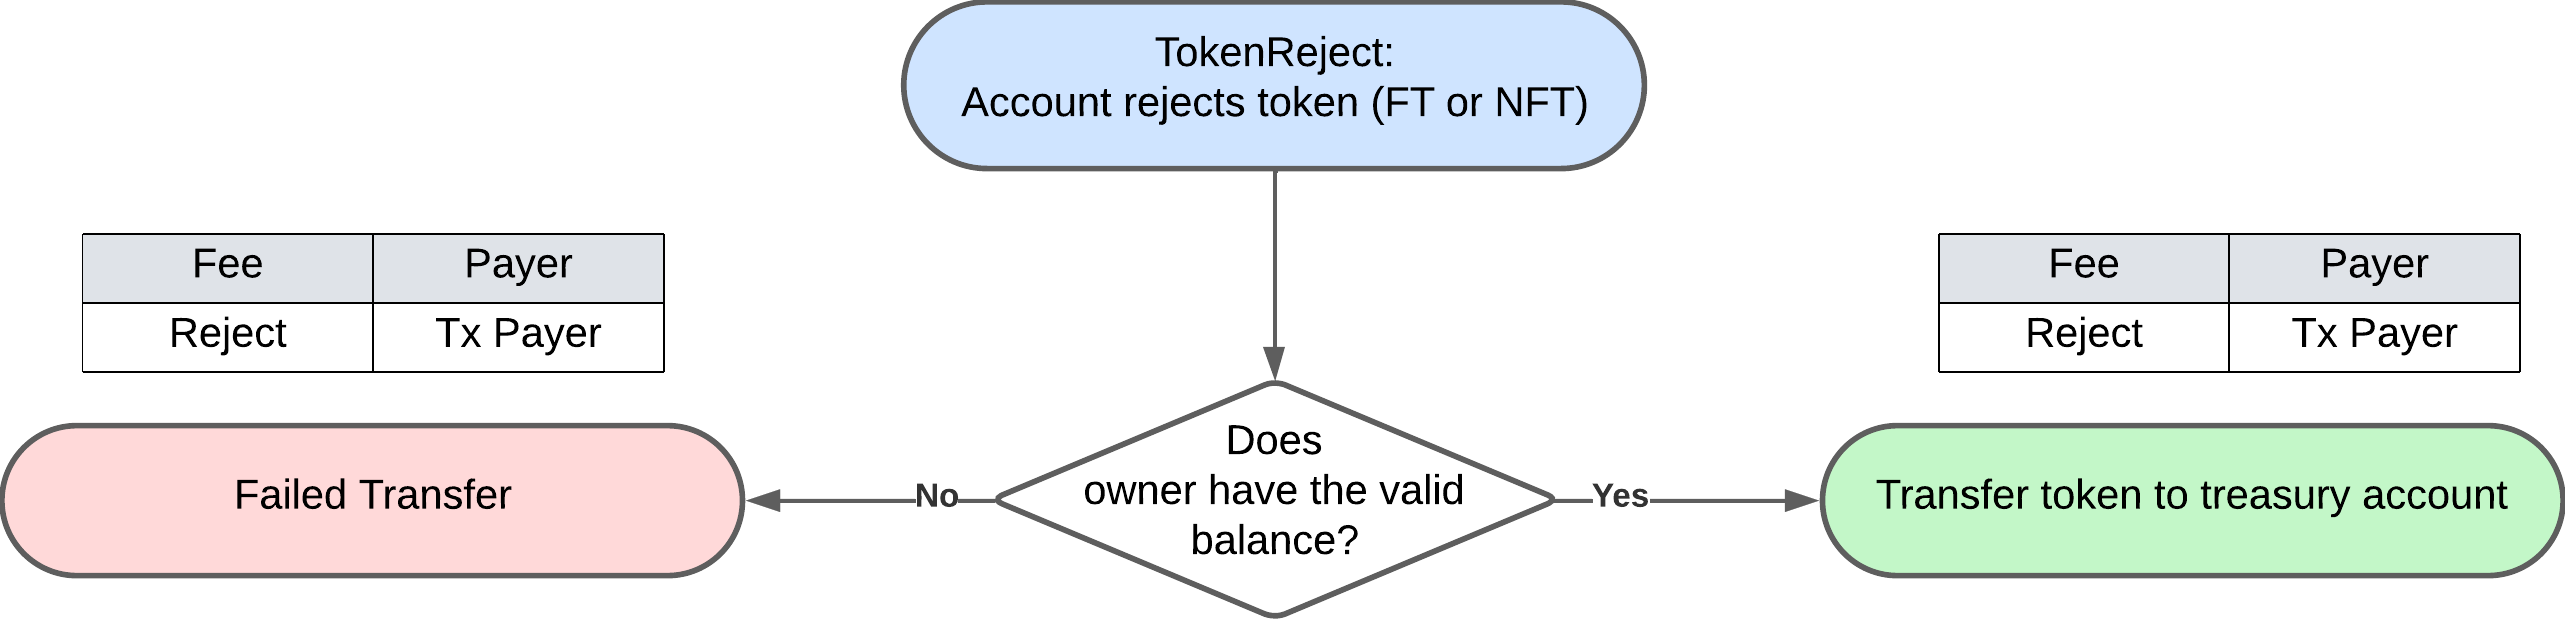 Token Reject Transaction